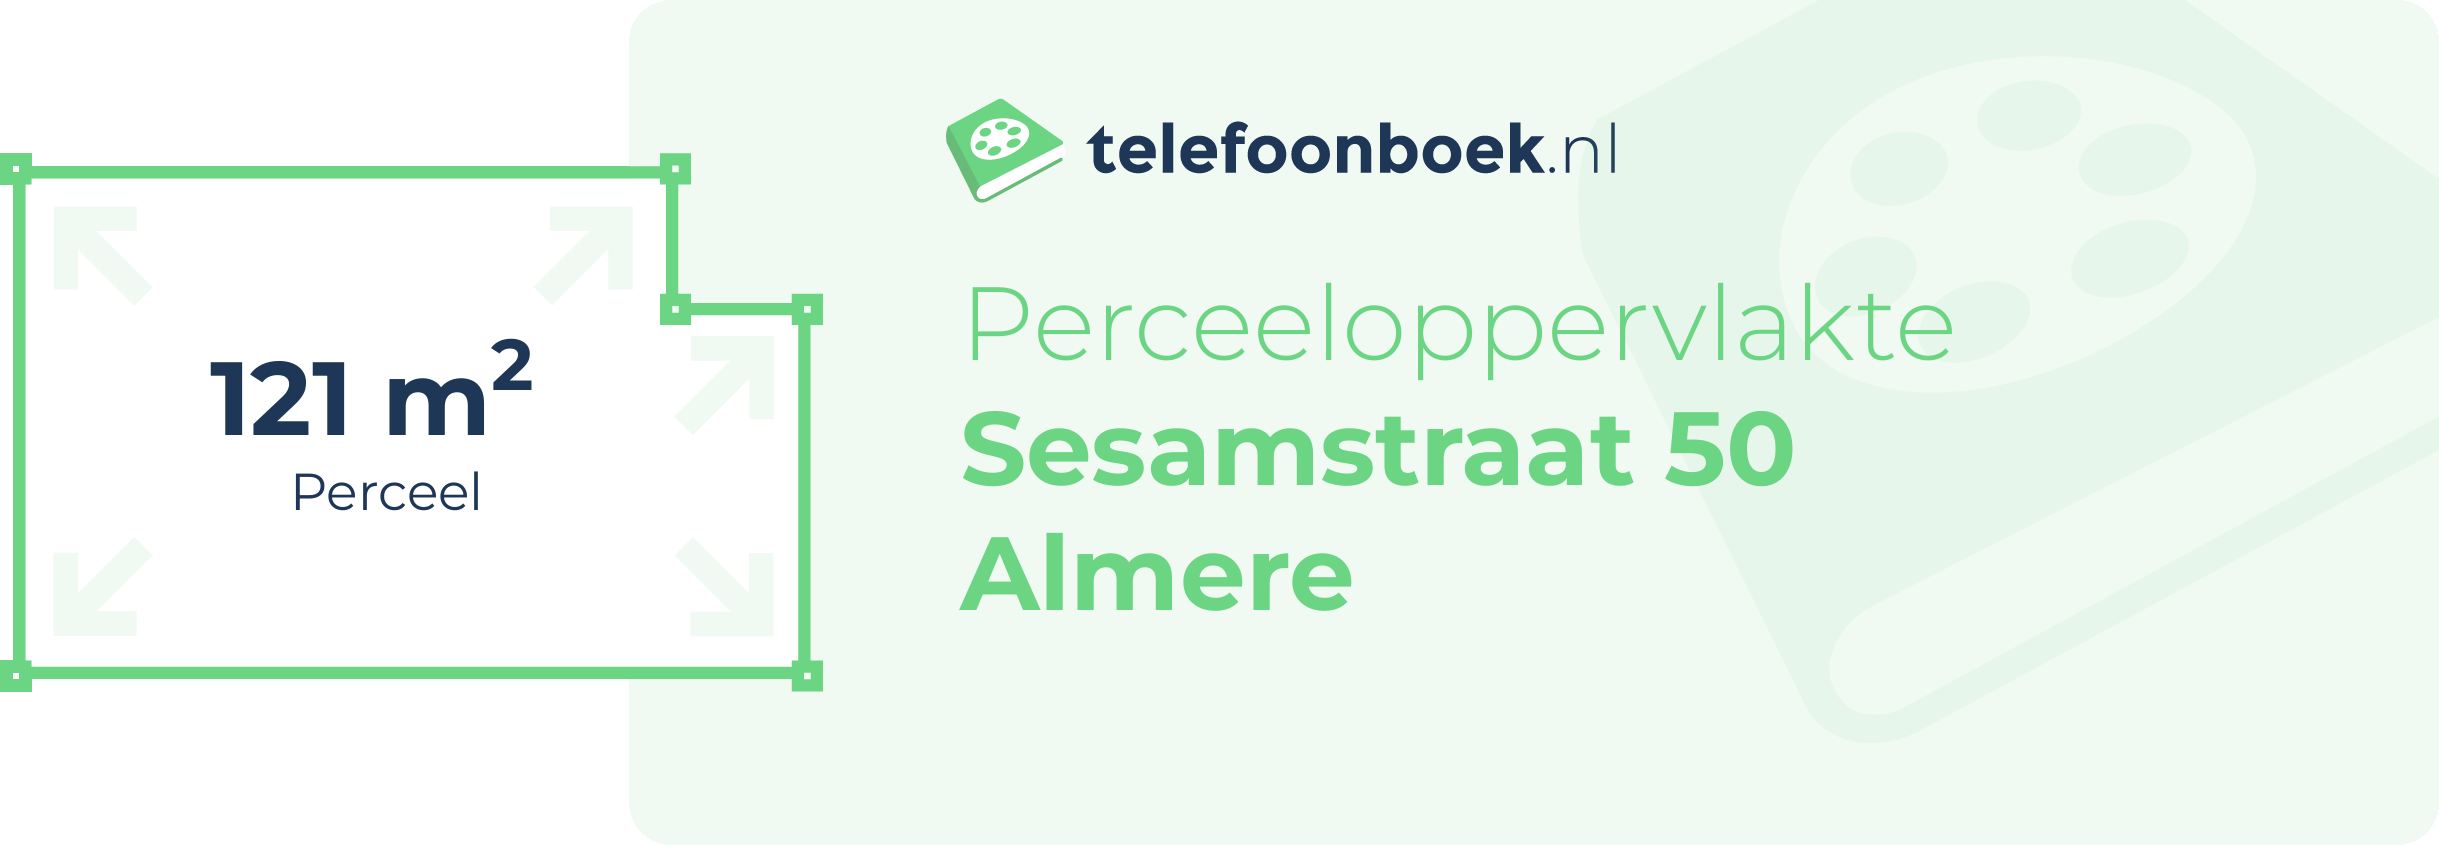 Perceeloppervlakte Sesamstraat 50 Almere